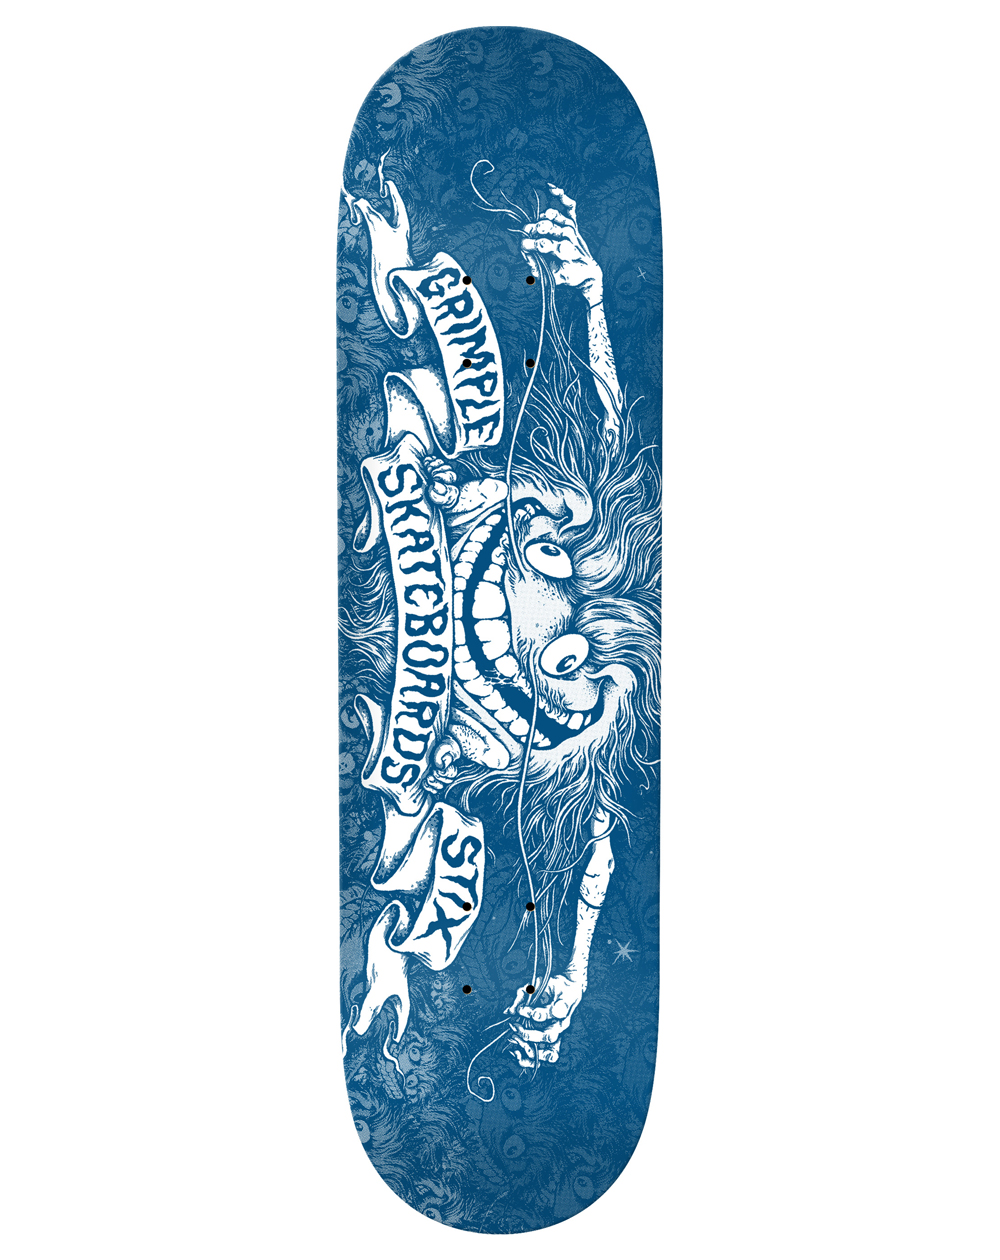 Anti Hero Grimple Stix 8.06" Skateboard Deck Blue